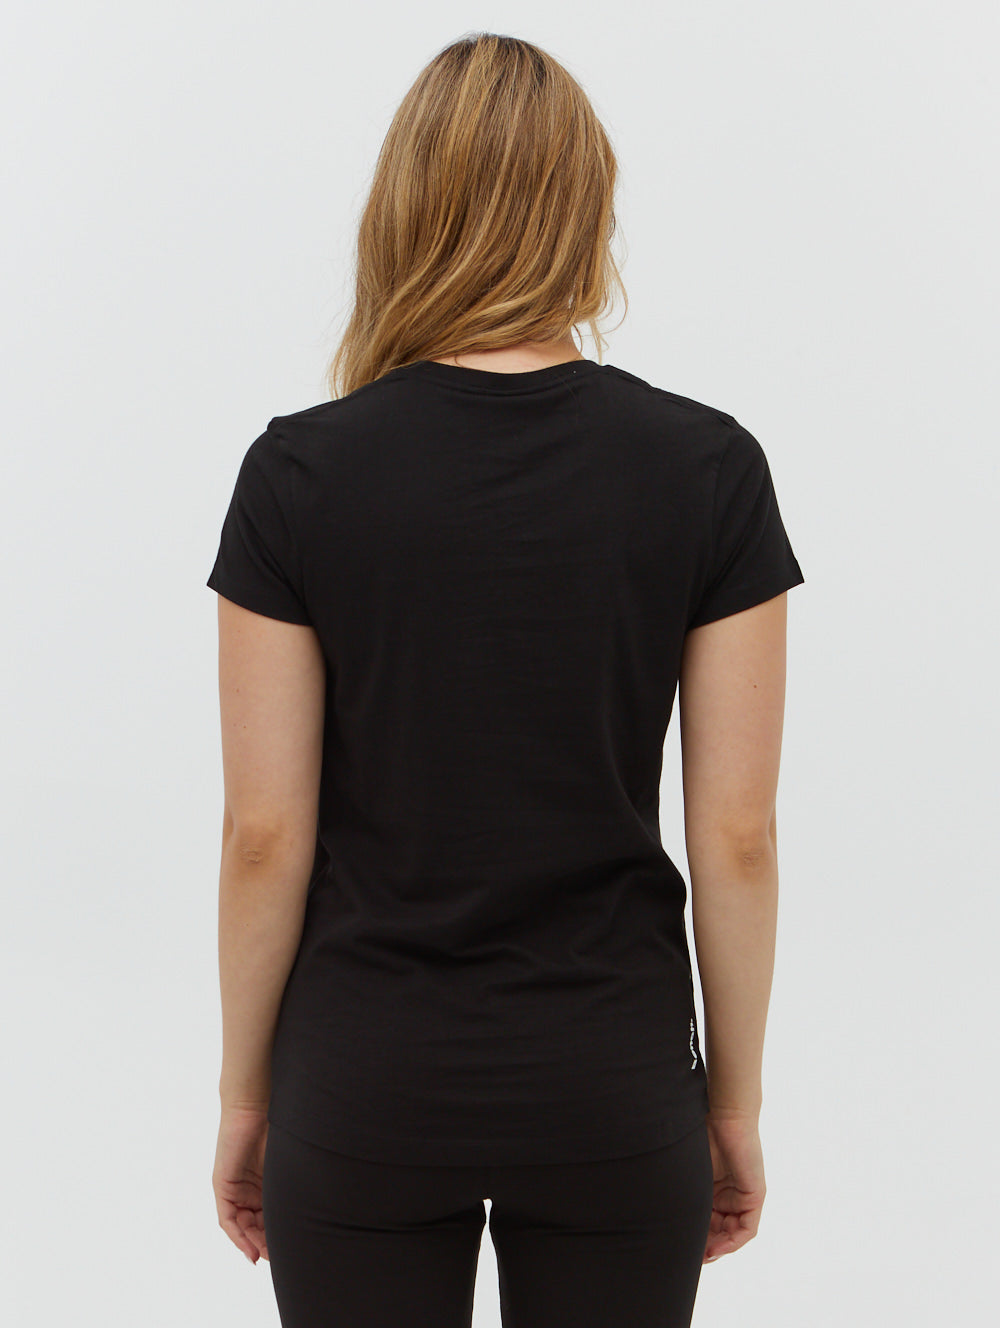 Bench Women's Spine Tee Shirt